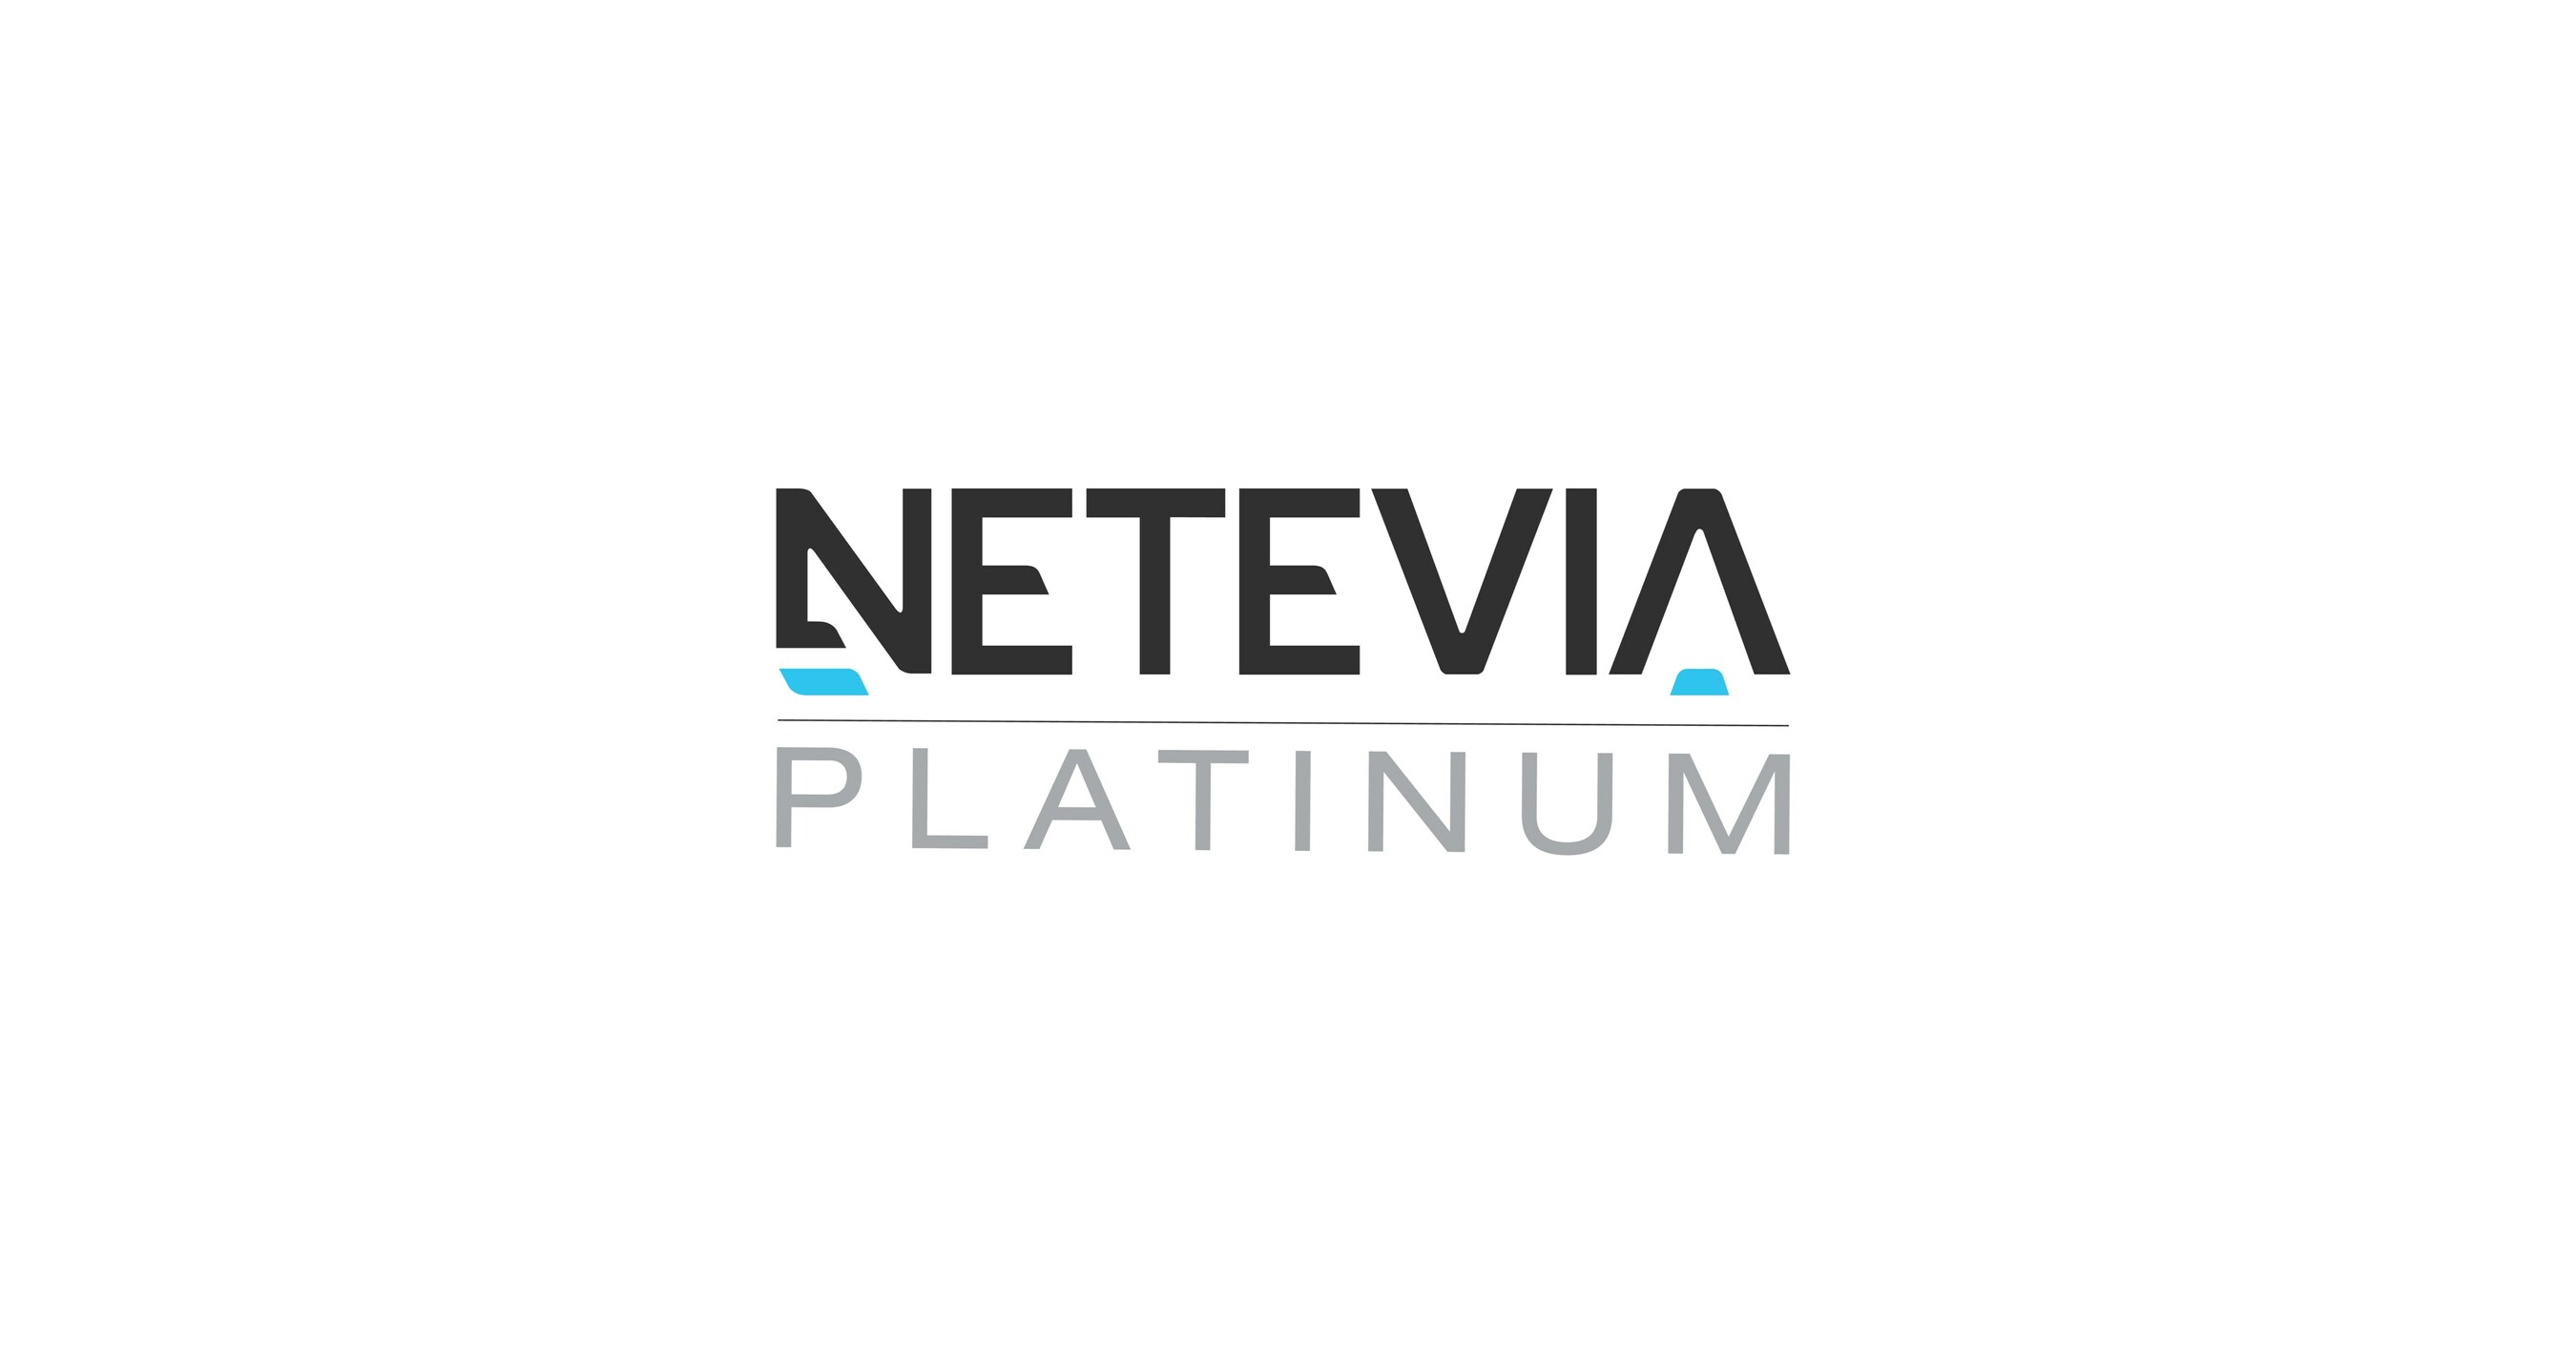 Netevia Platinum Direct - Pamela Barron Independent Agent